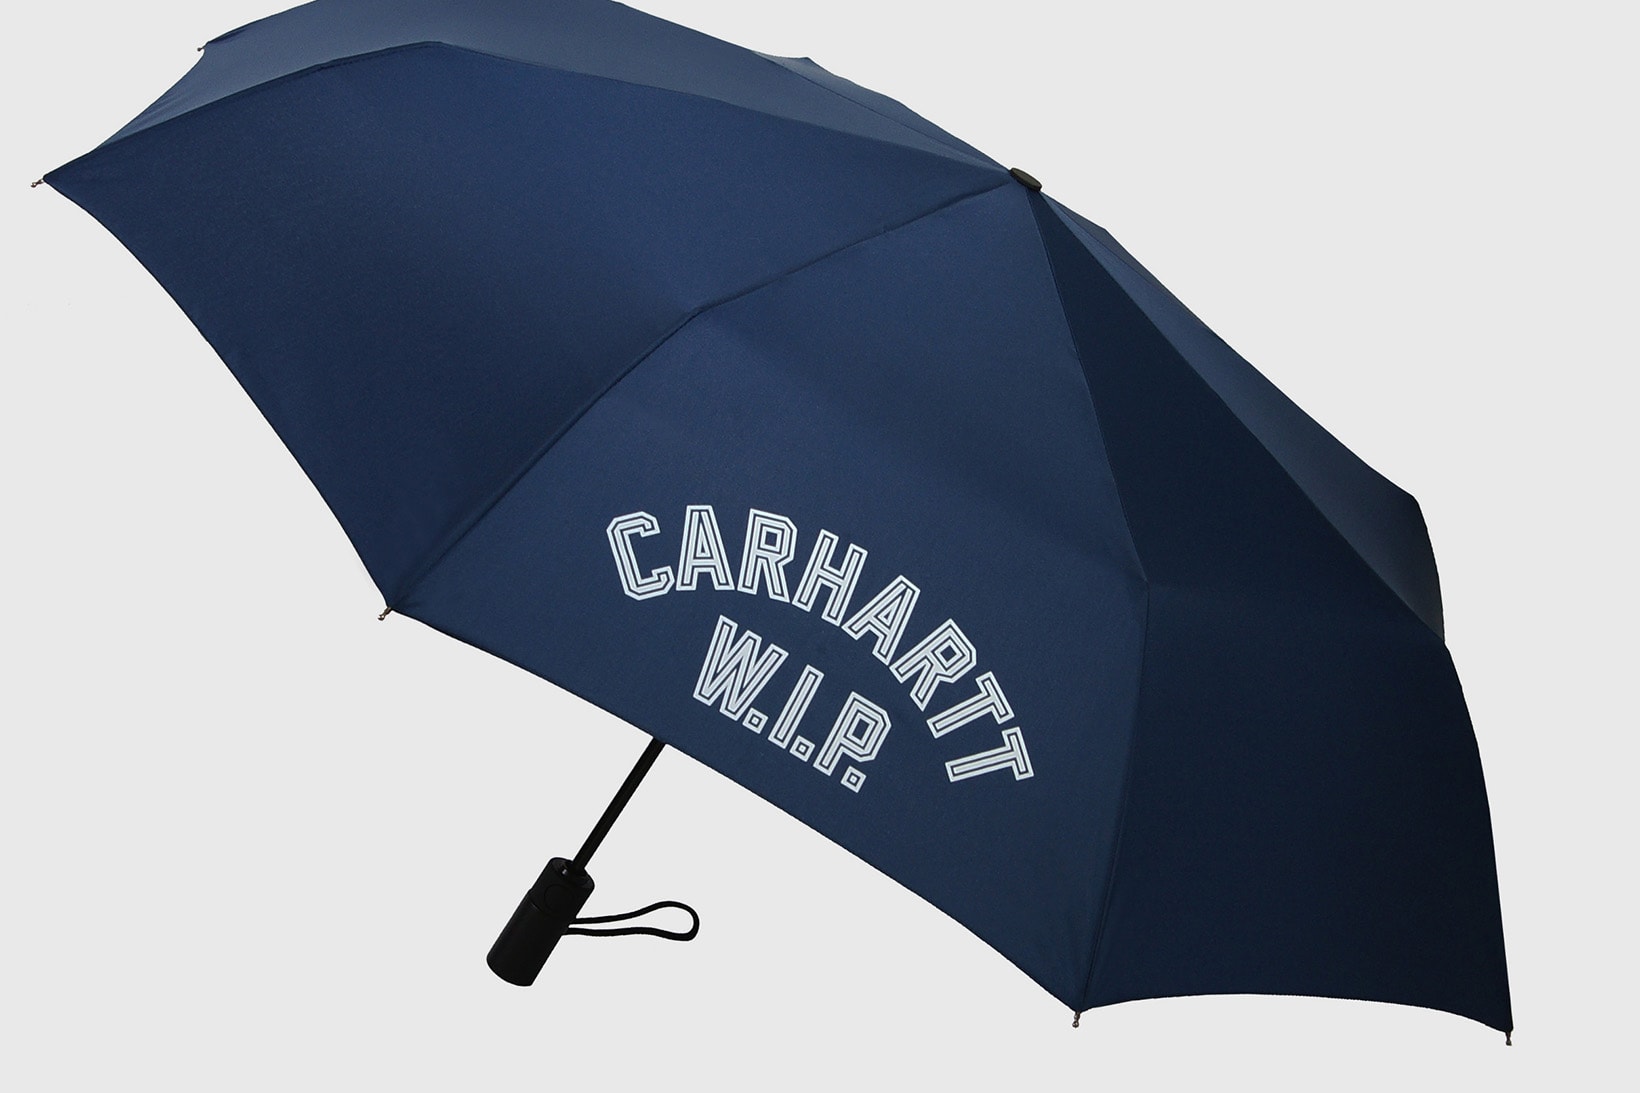 London Undercover x Carhartt WIP Umbrella